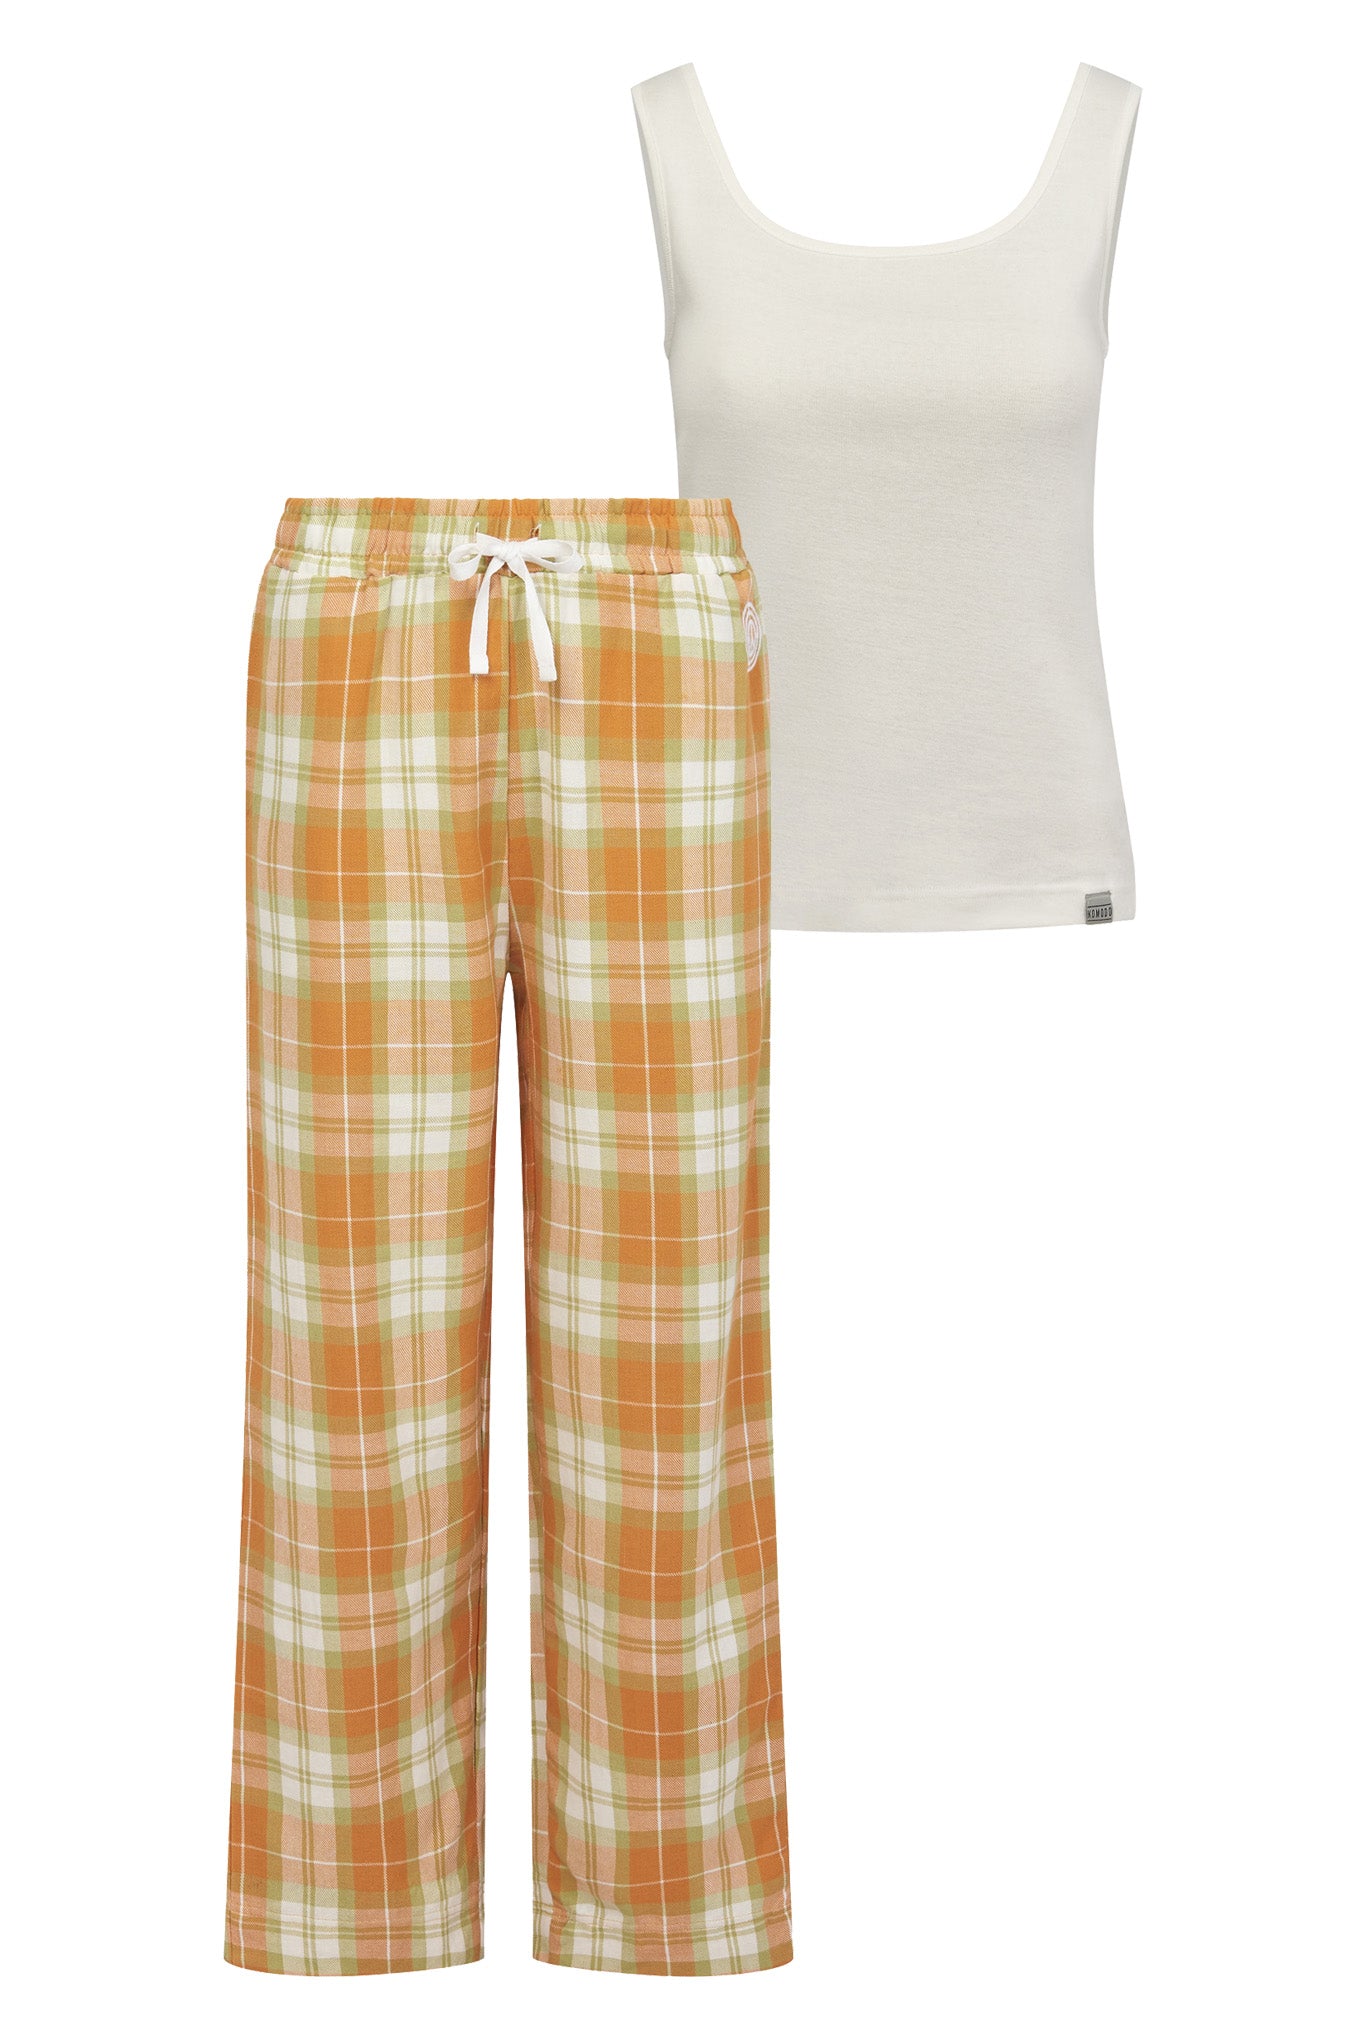 JIM JAM Pyjama Trousers Set Womens - GOTS Organic Cotton Orange